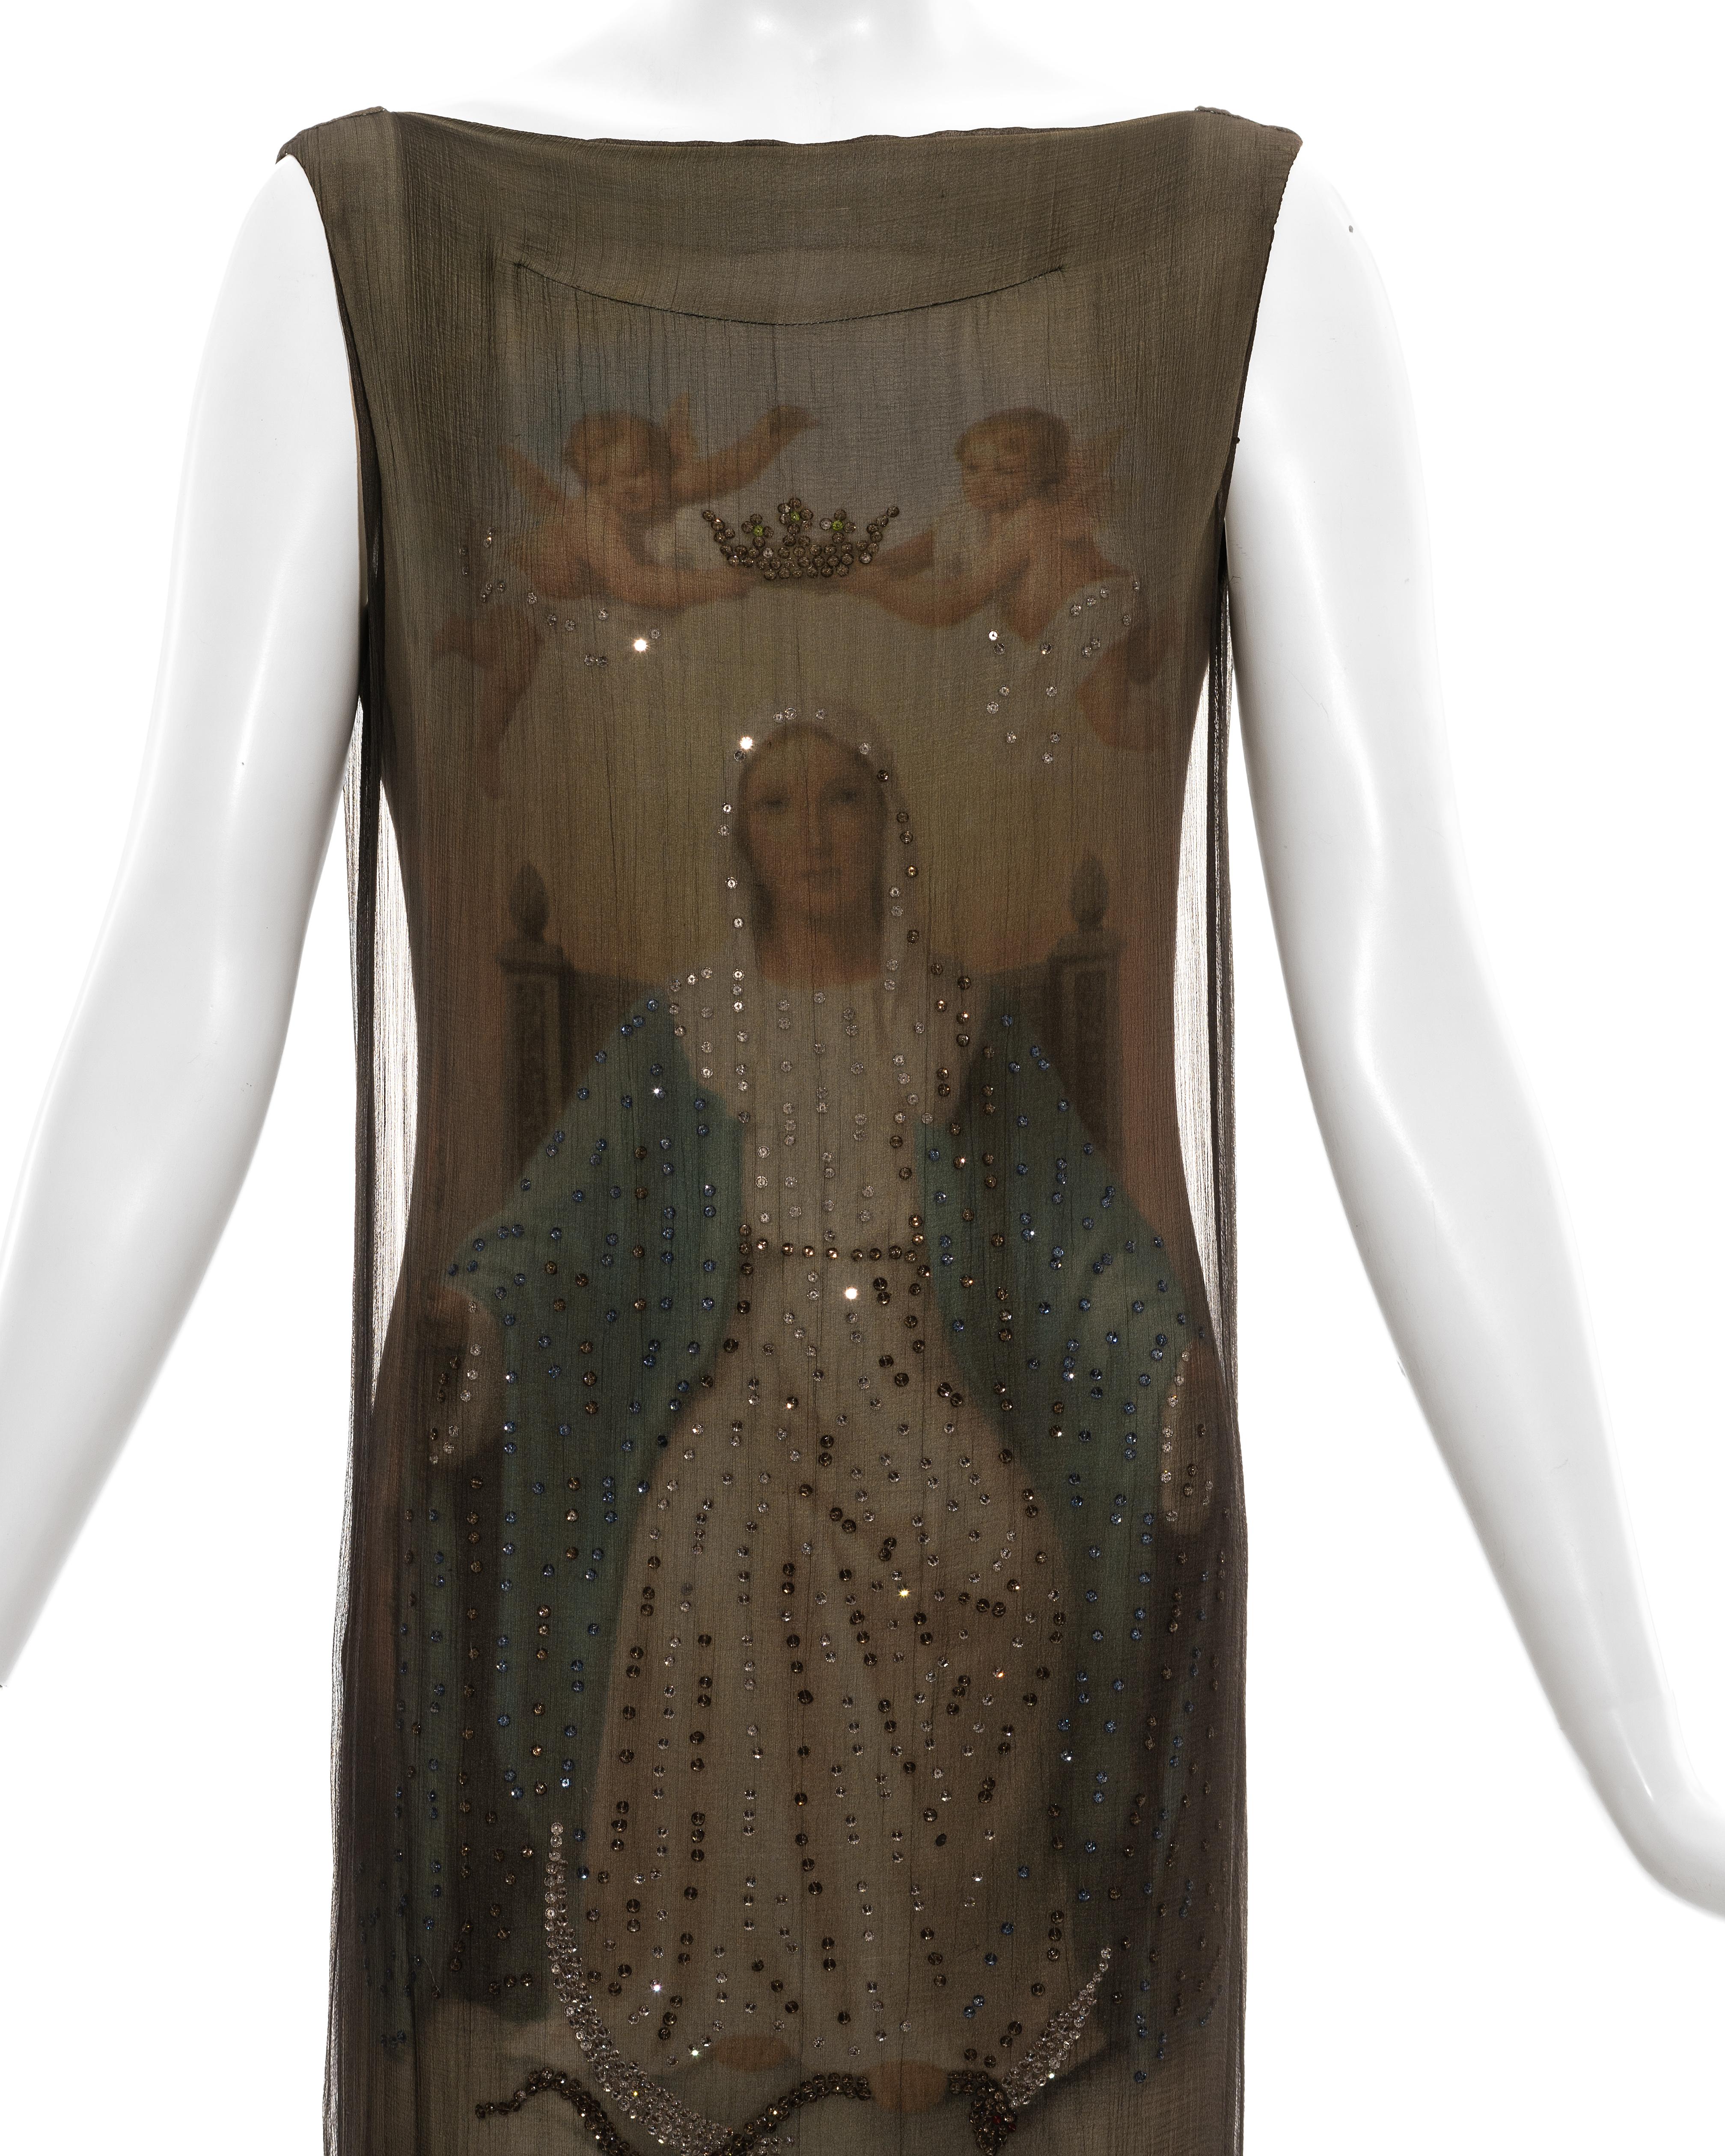 dolce and gabbana virgin mary dress